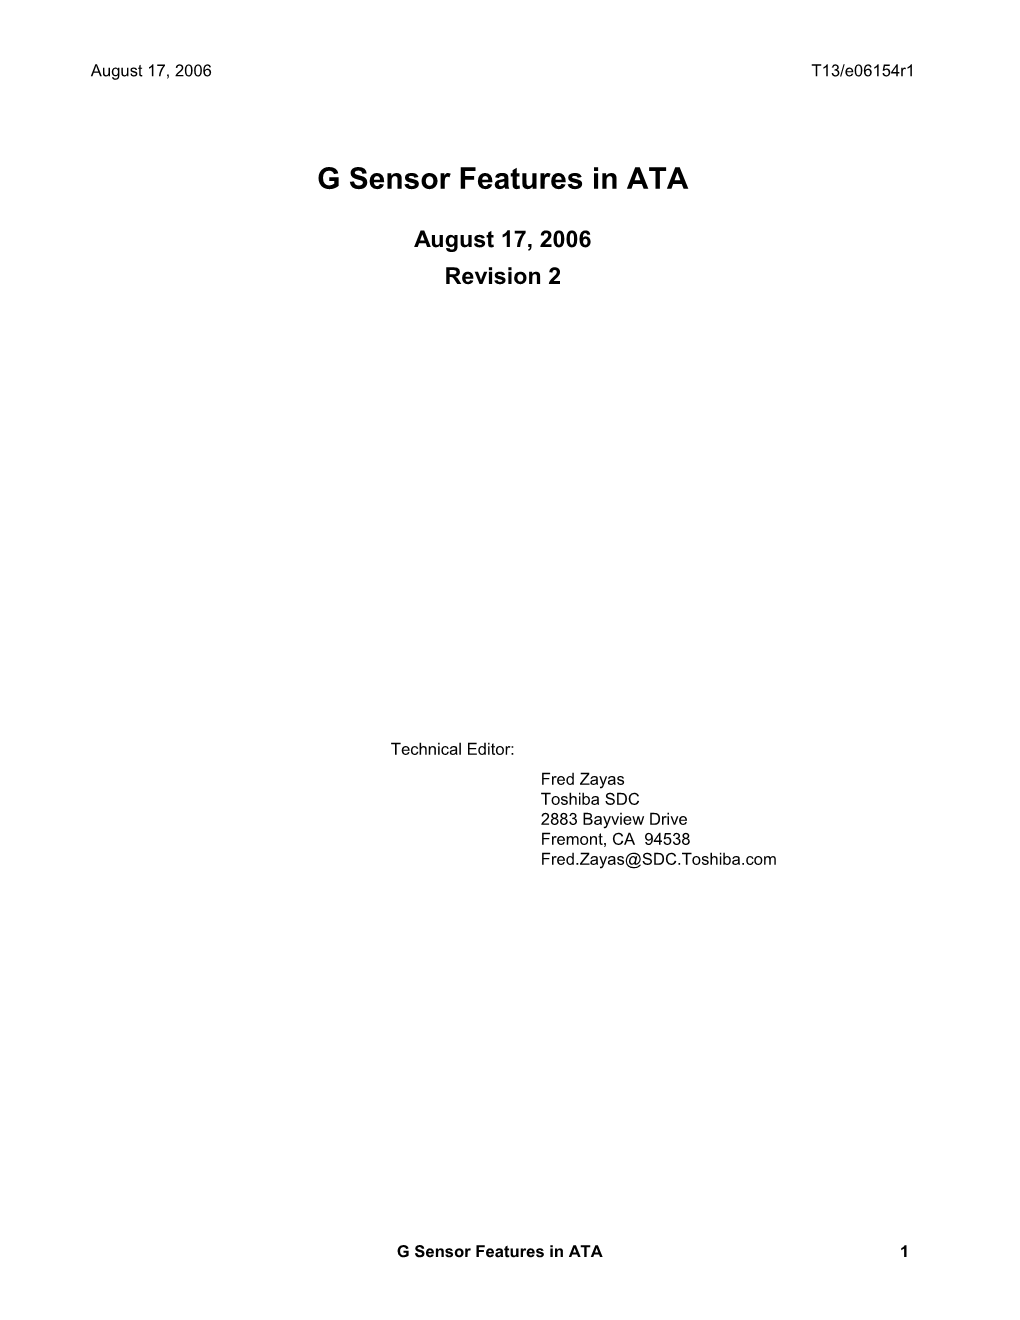 G Sensor Features in ATA